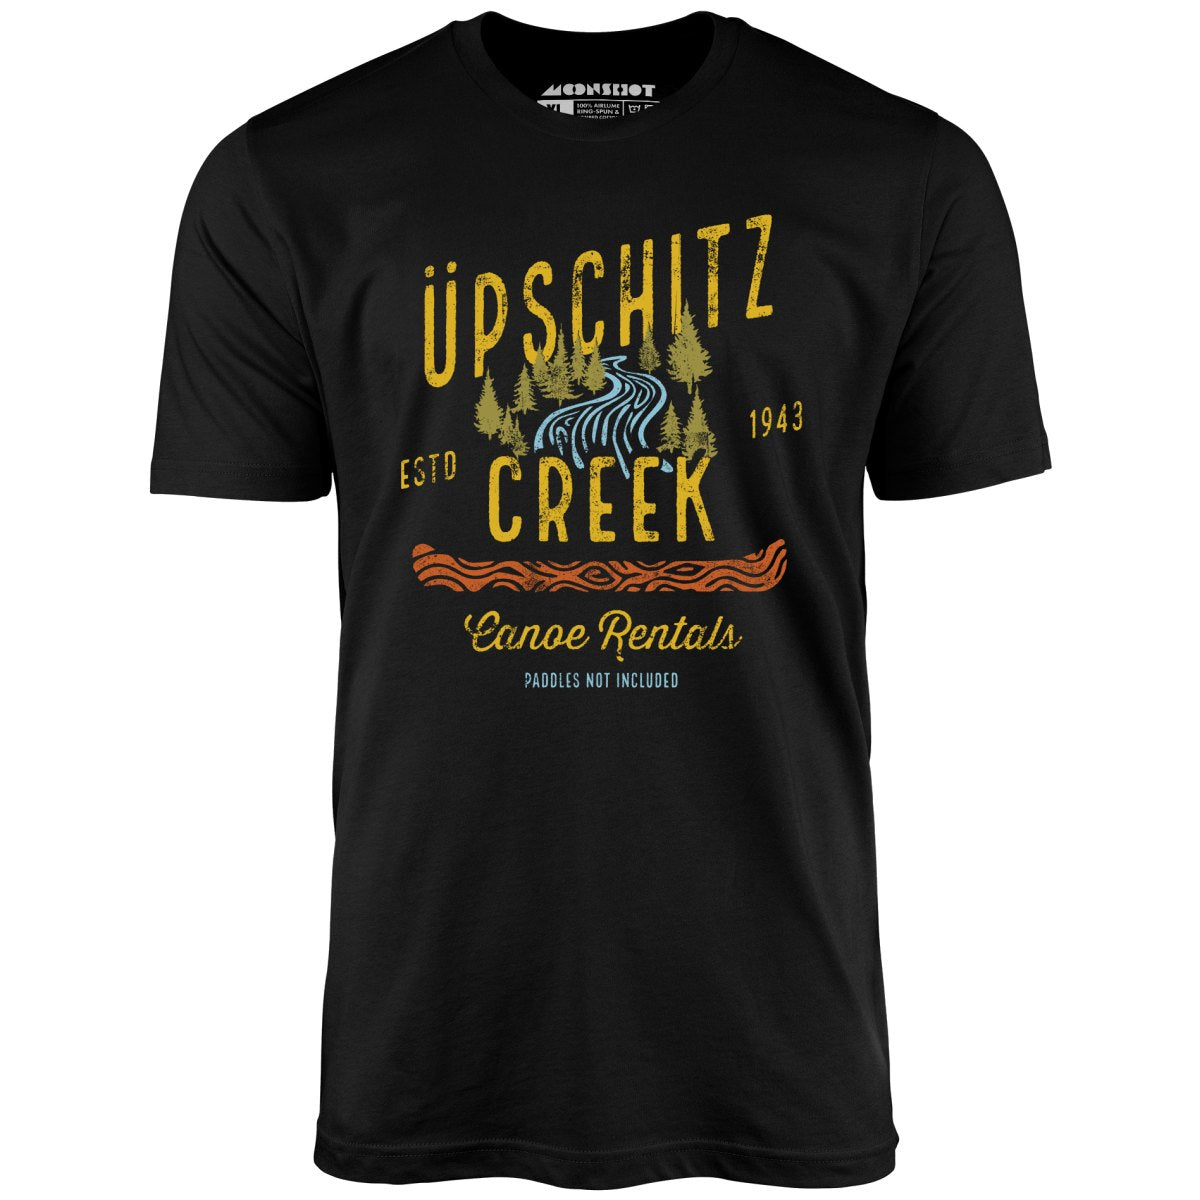 Upschitz Creek - Unisex T-Shirt